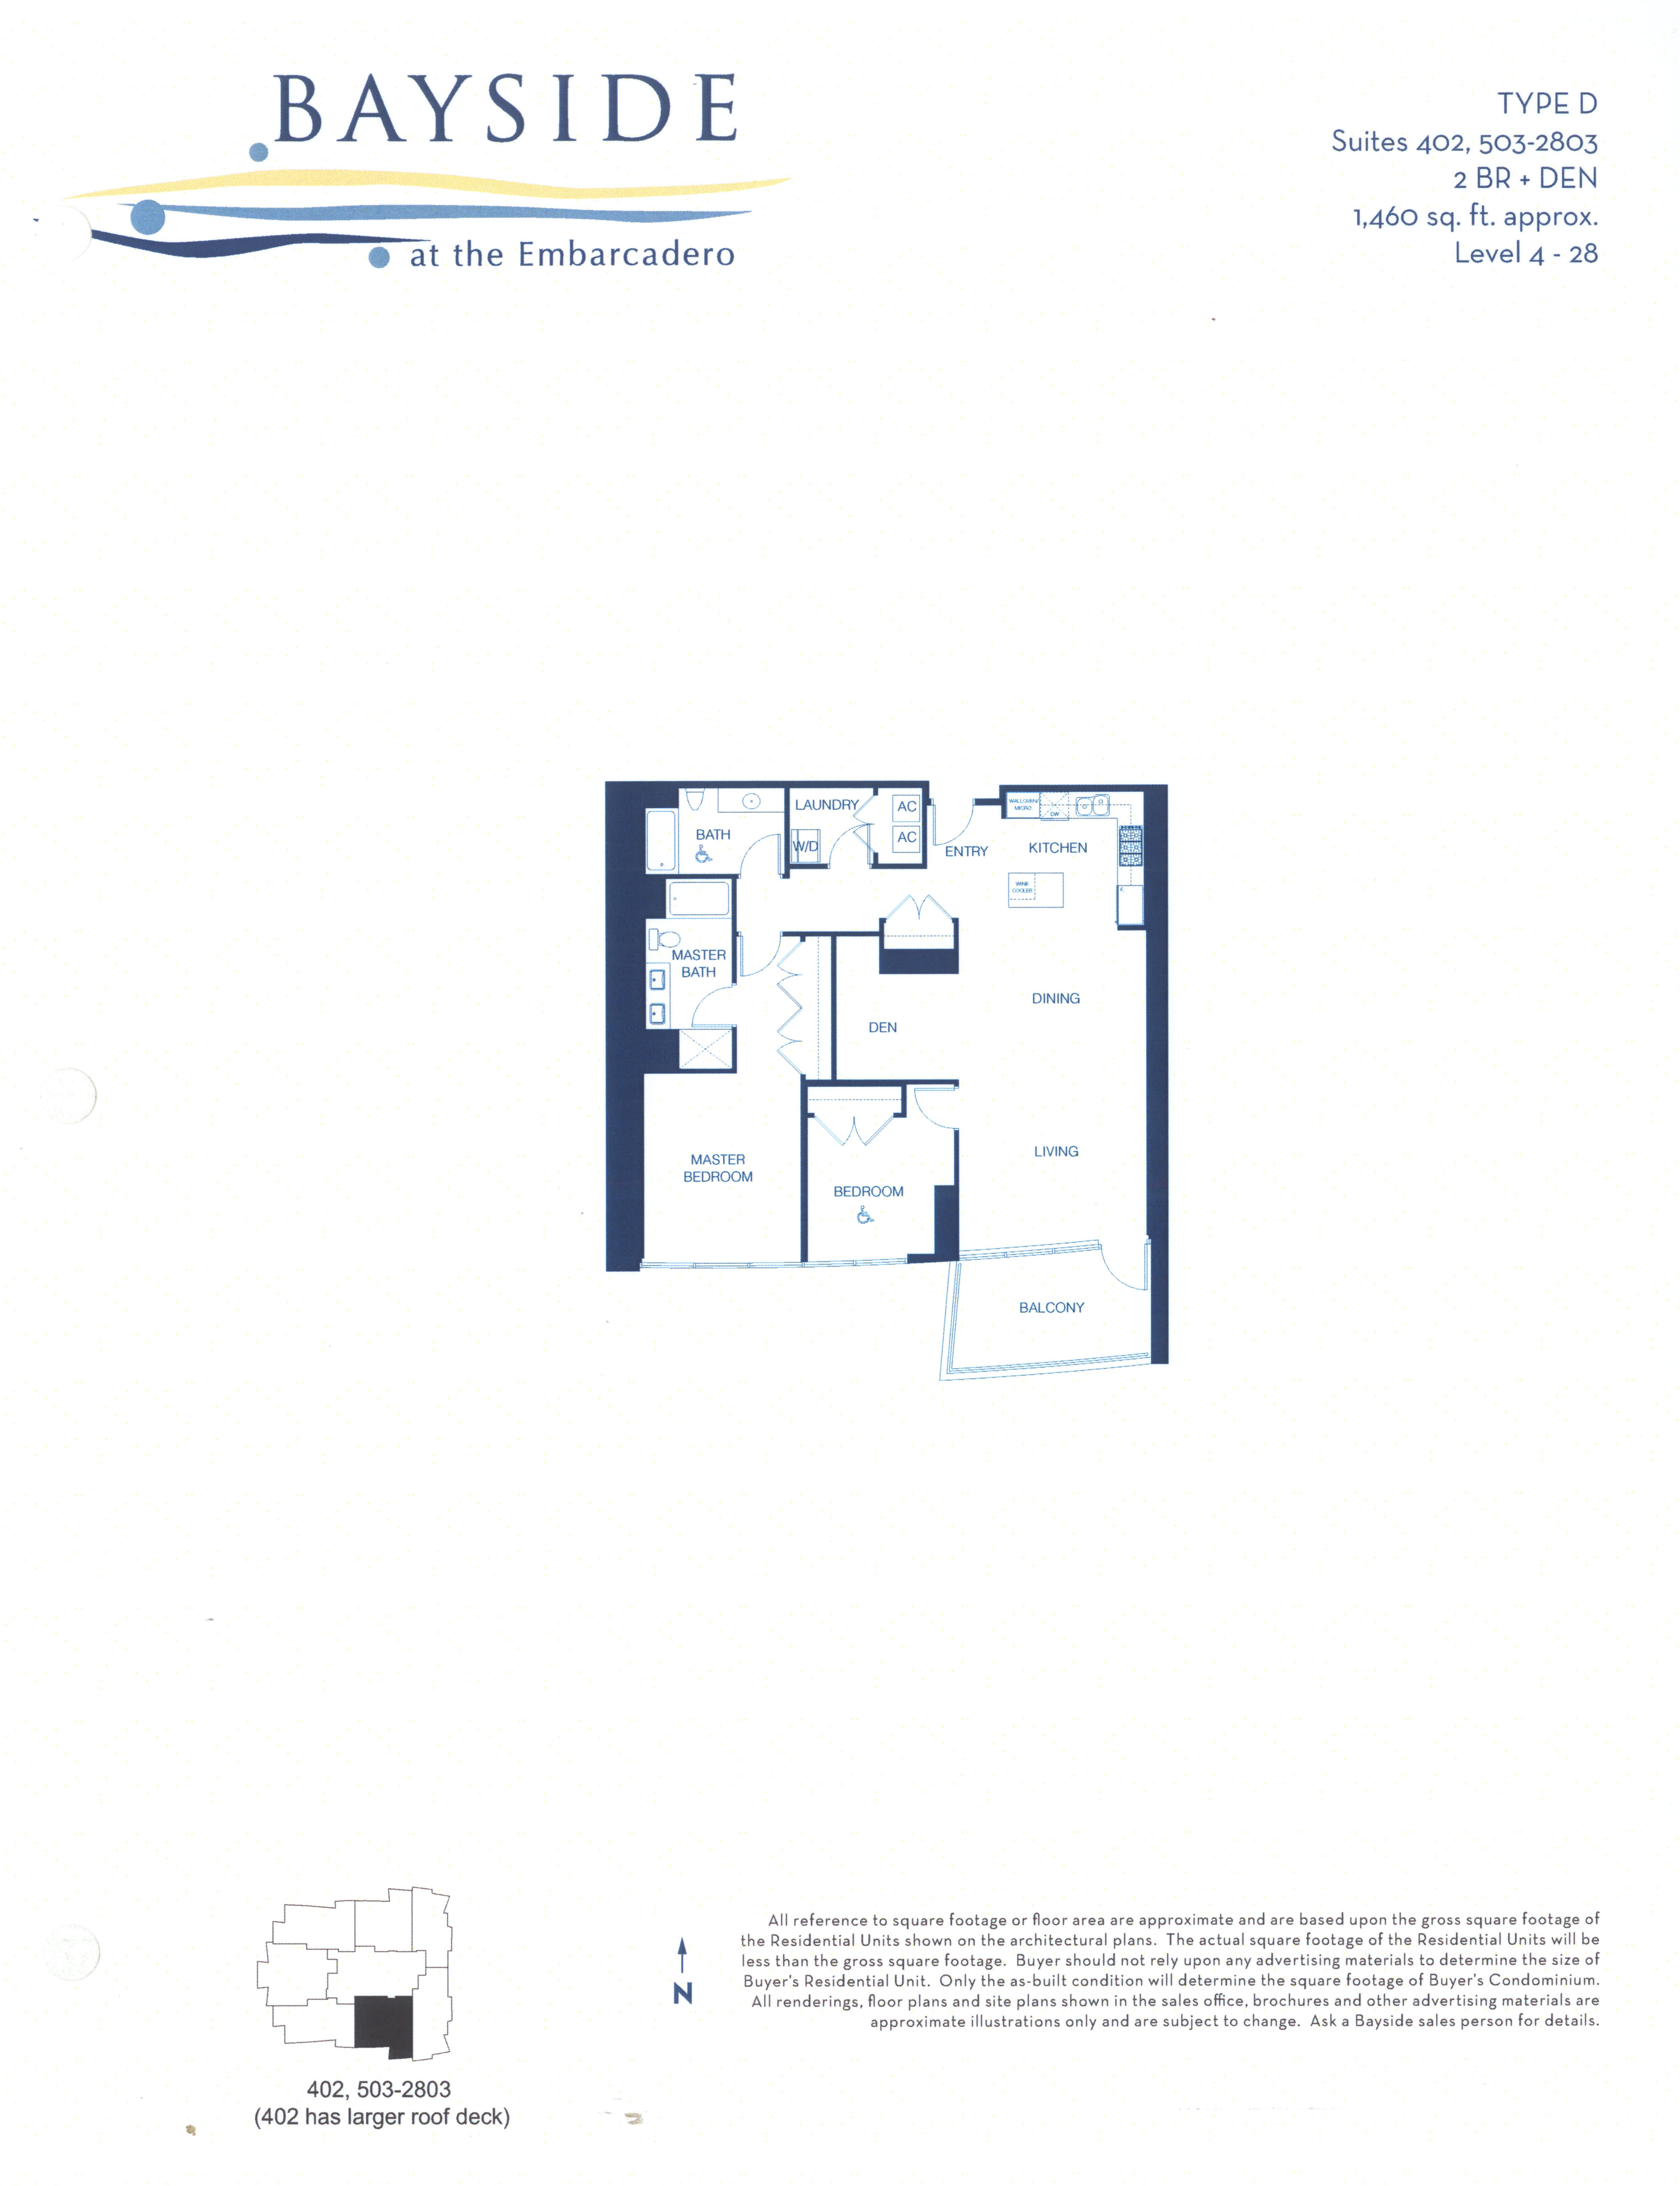 Bayside Floor Plan Level 4- 28 Type D